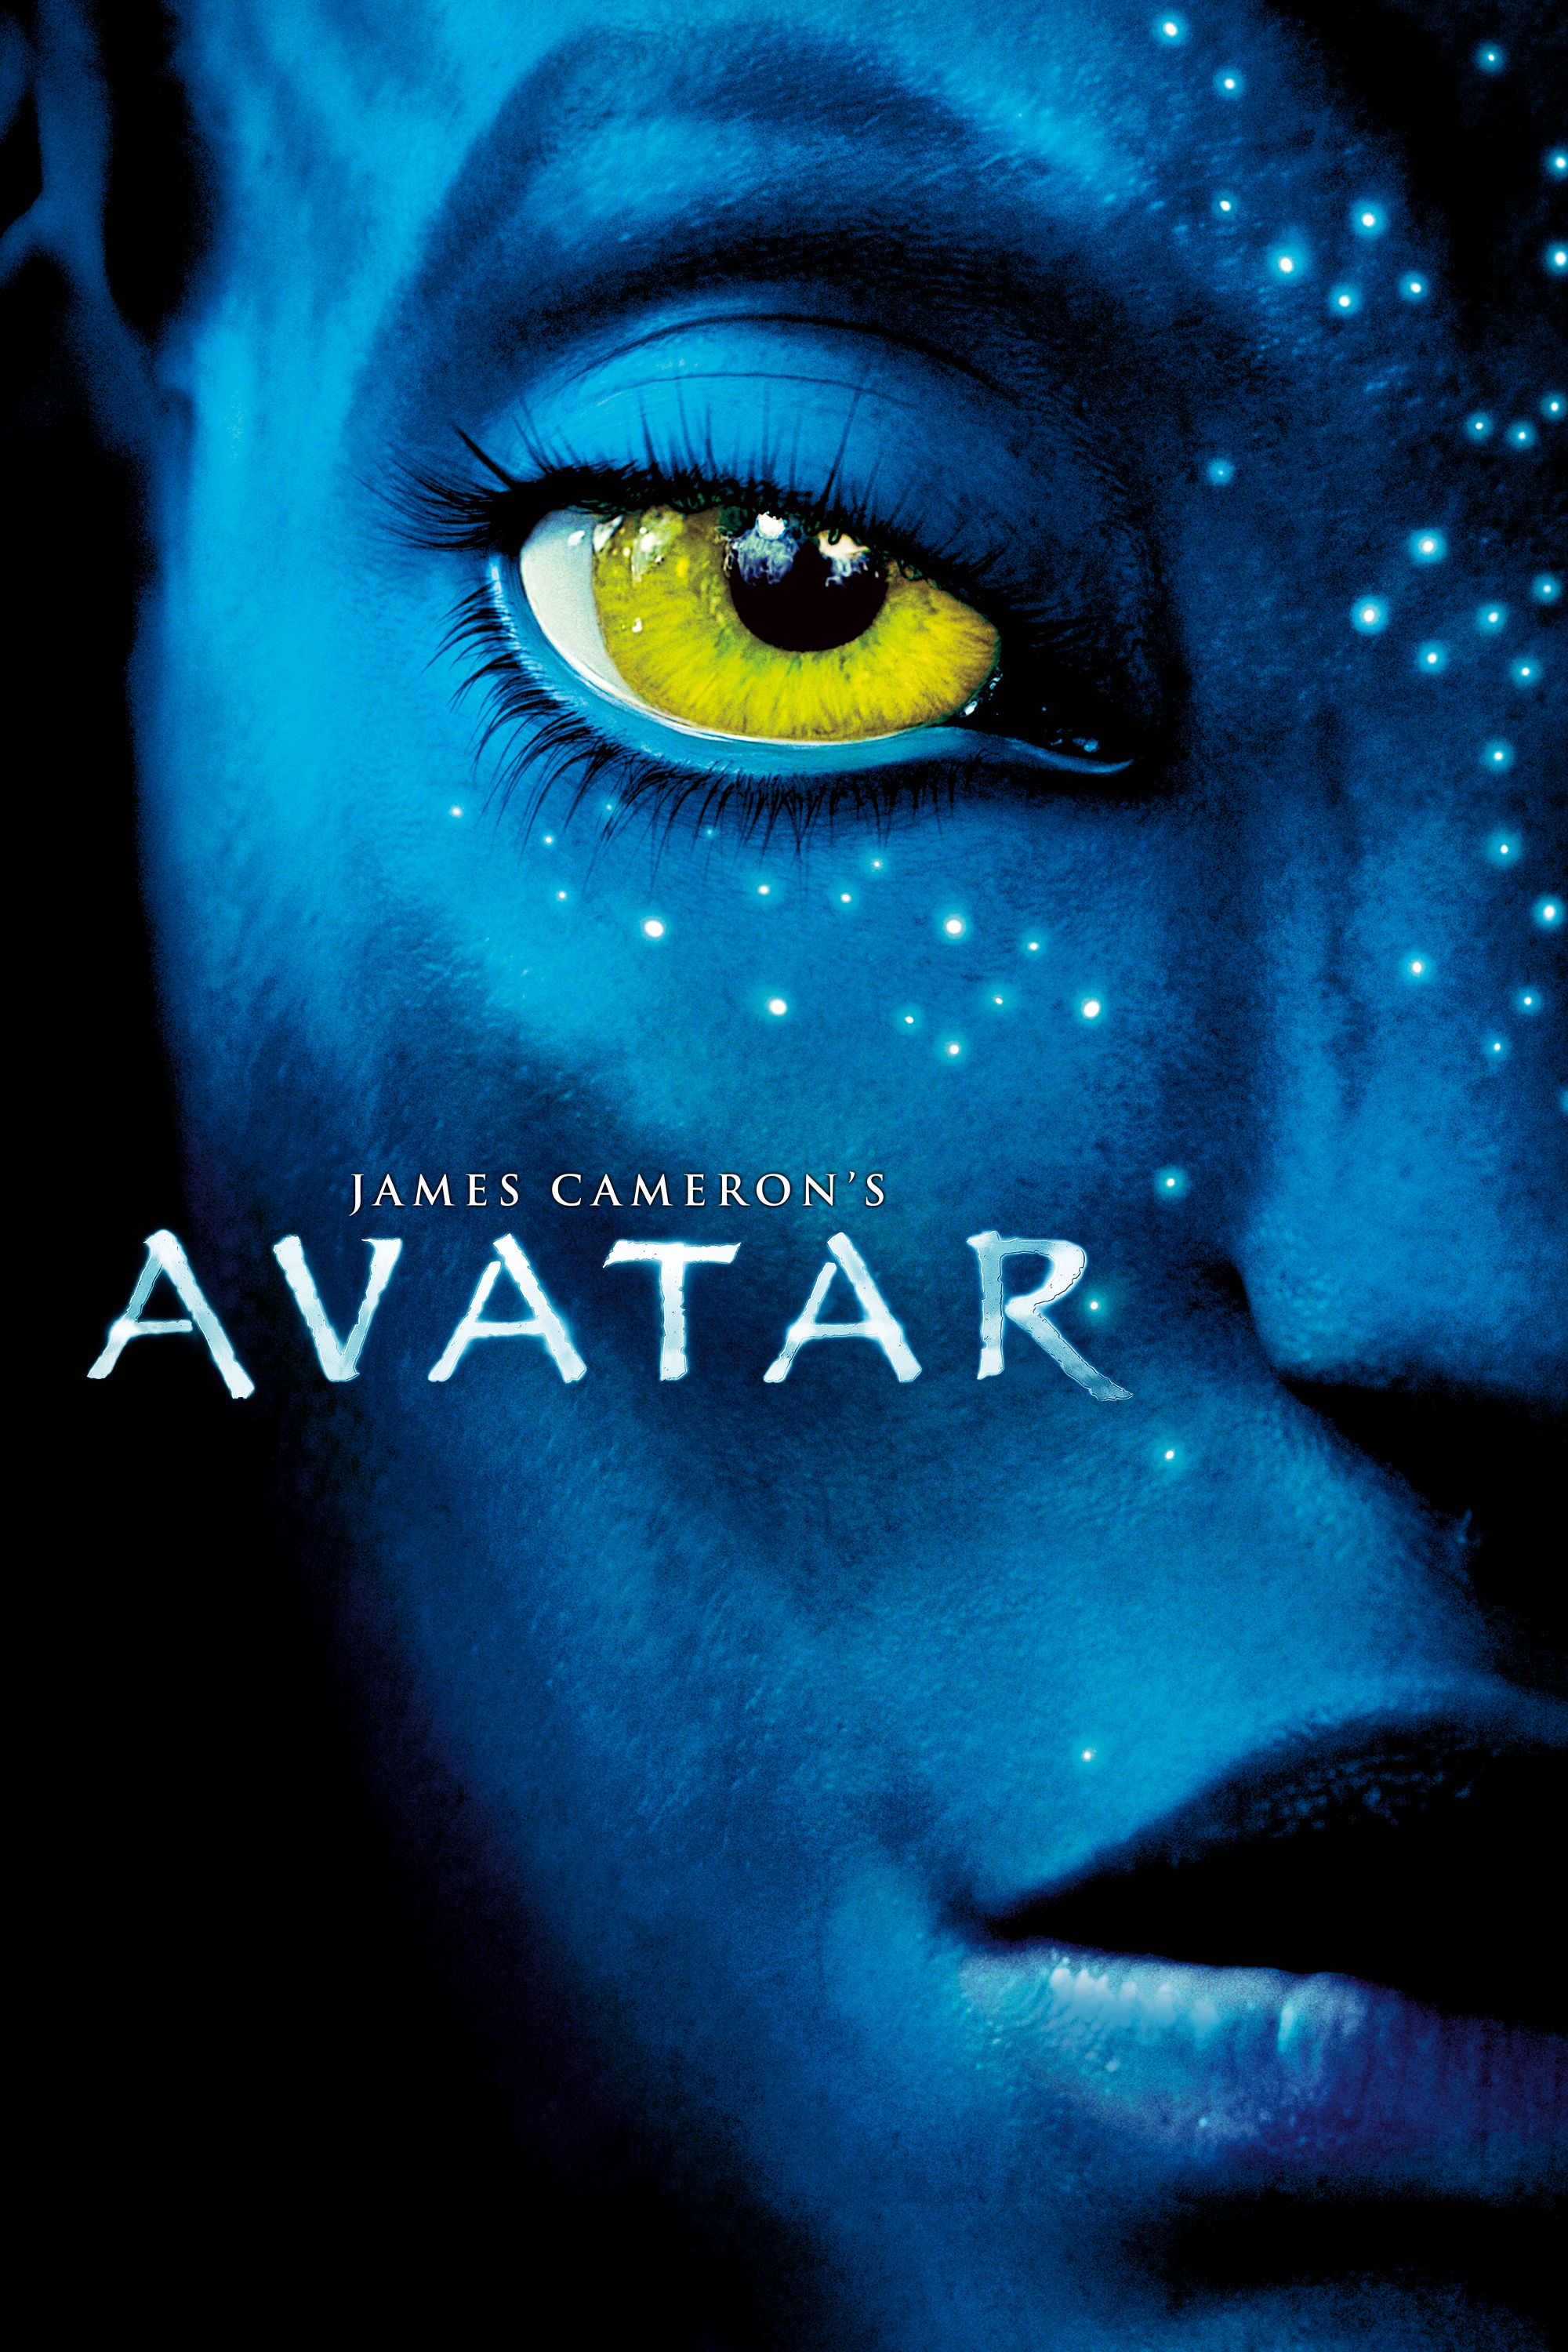 Avatar 2 Full Movie Download in Tamil Isaimini Tamilrockers Moviesda  Kuttymovies  Telegram Tamil Dubbed  BollyTrendz